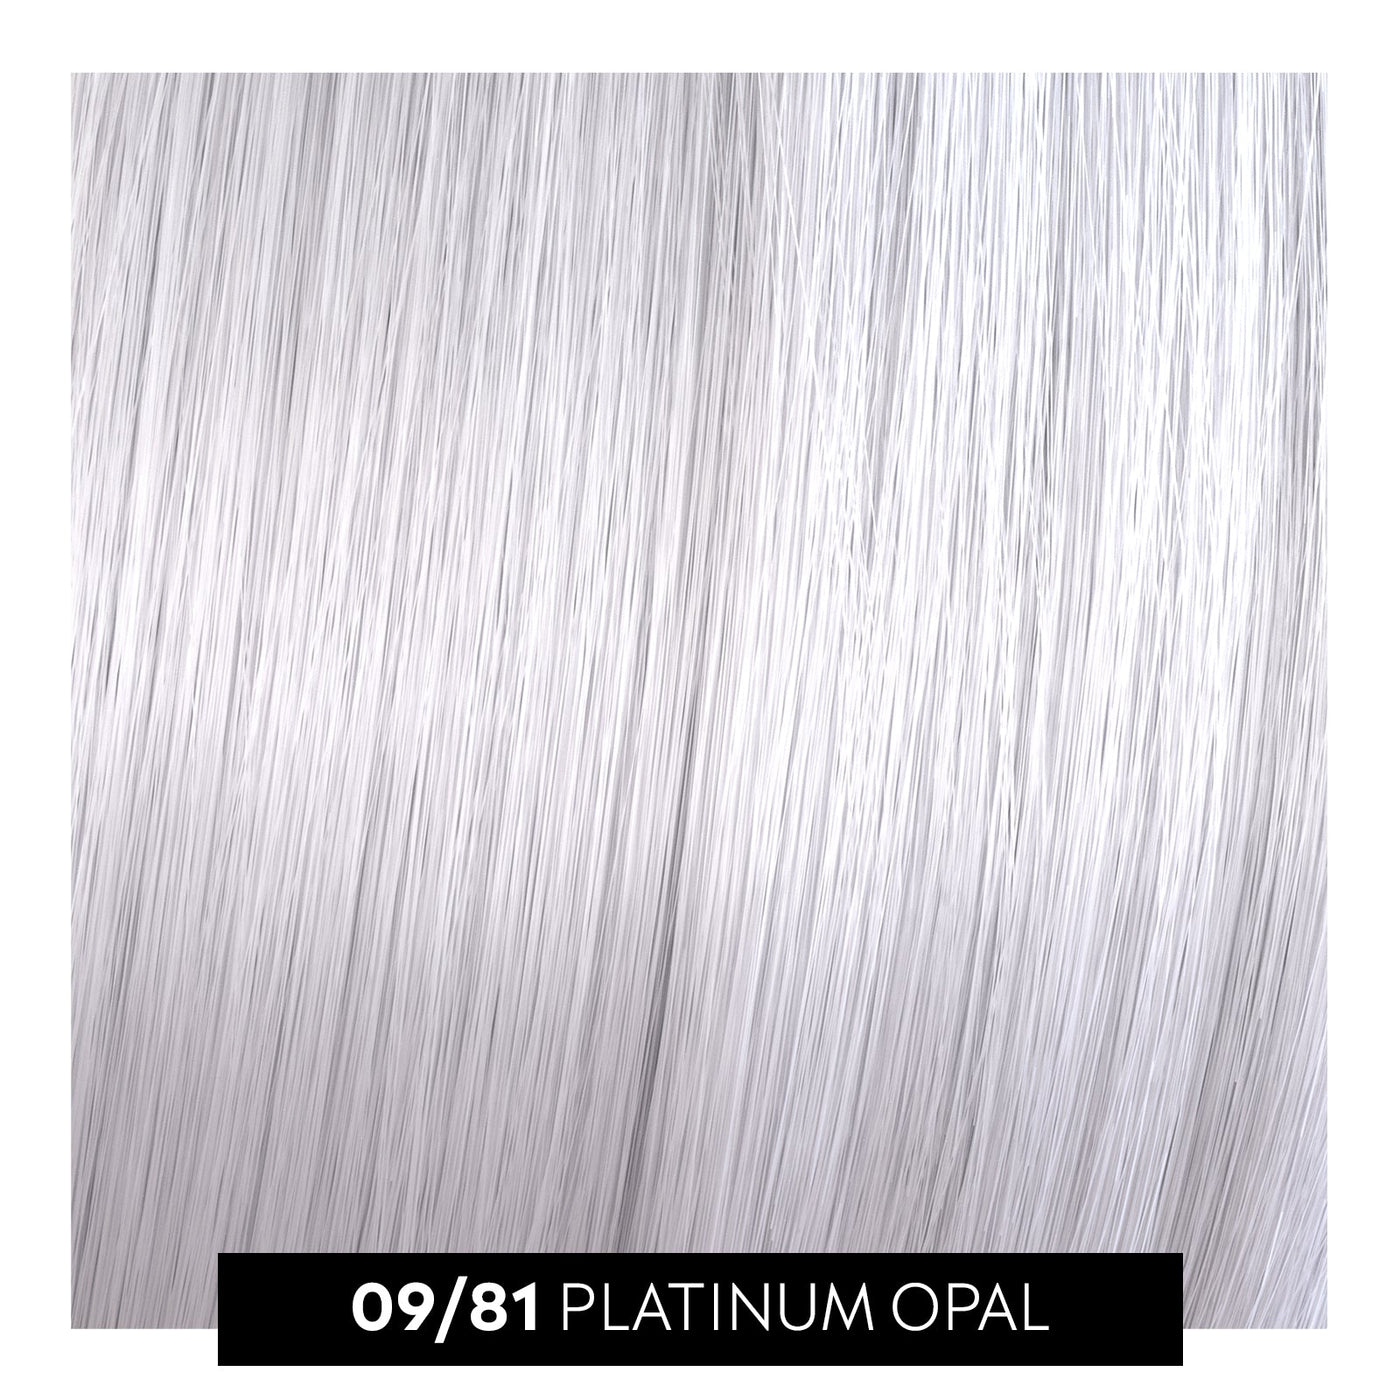 09/81 platinum opal